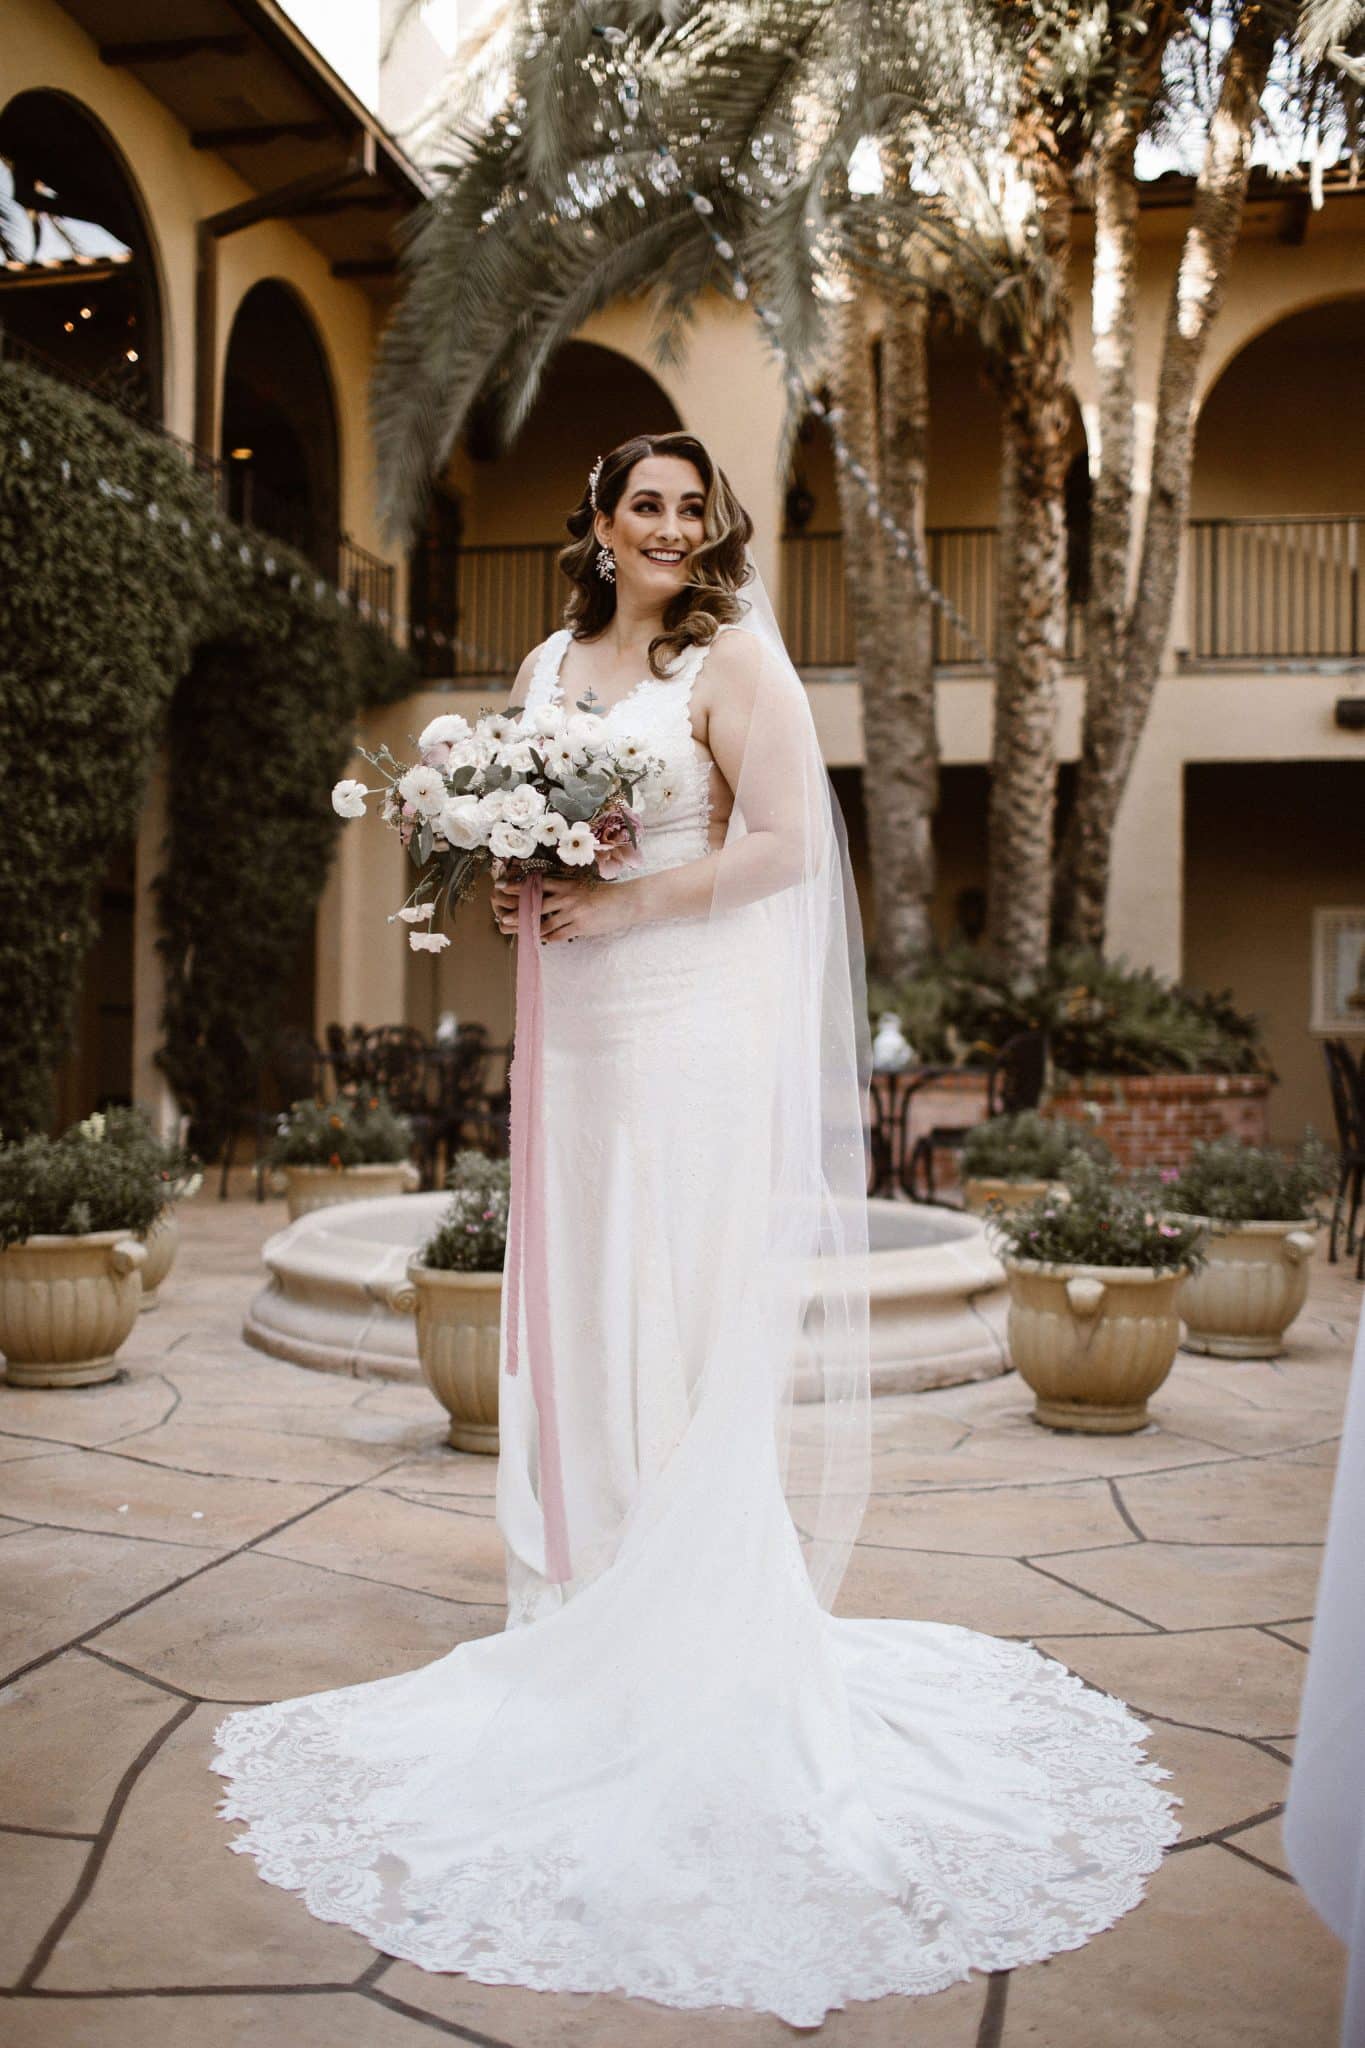 Bride at a Spanish style wedding venue in Florida